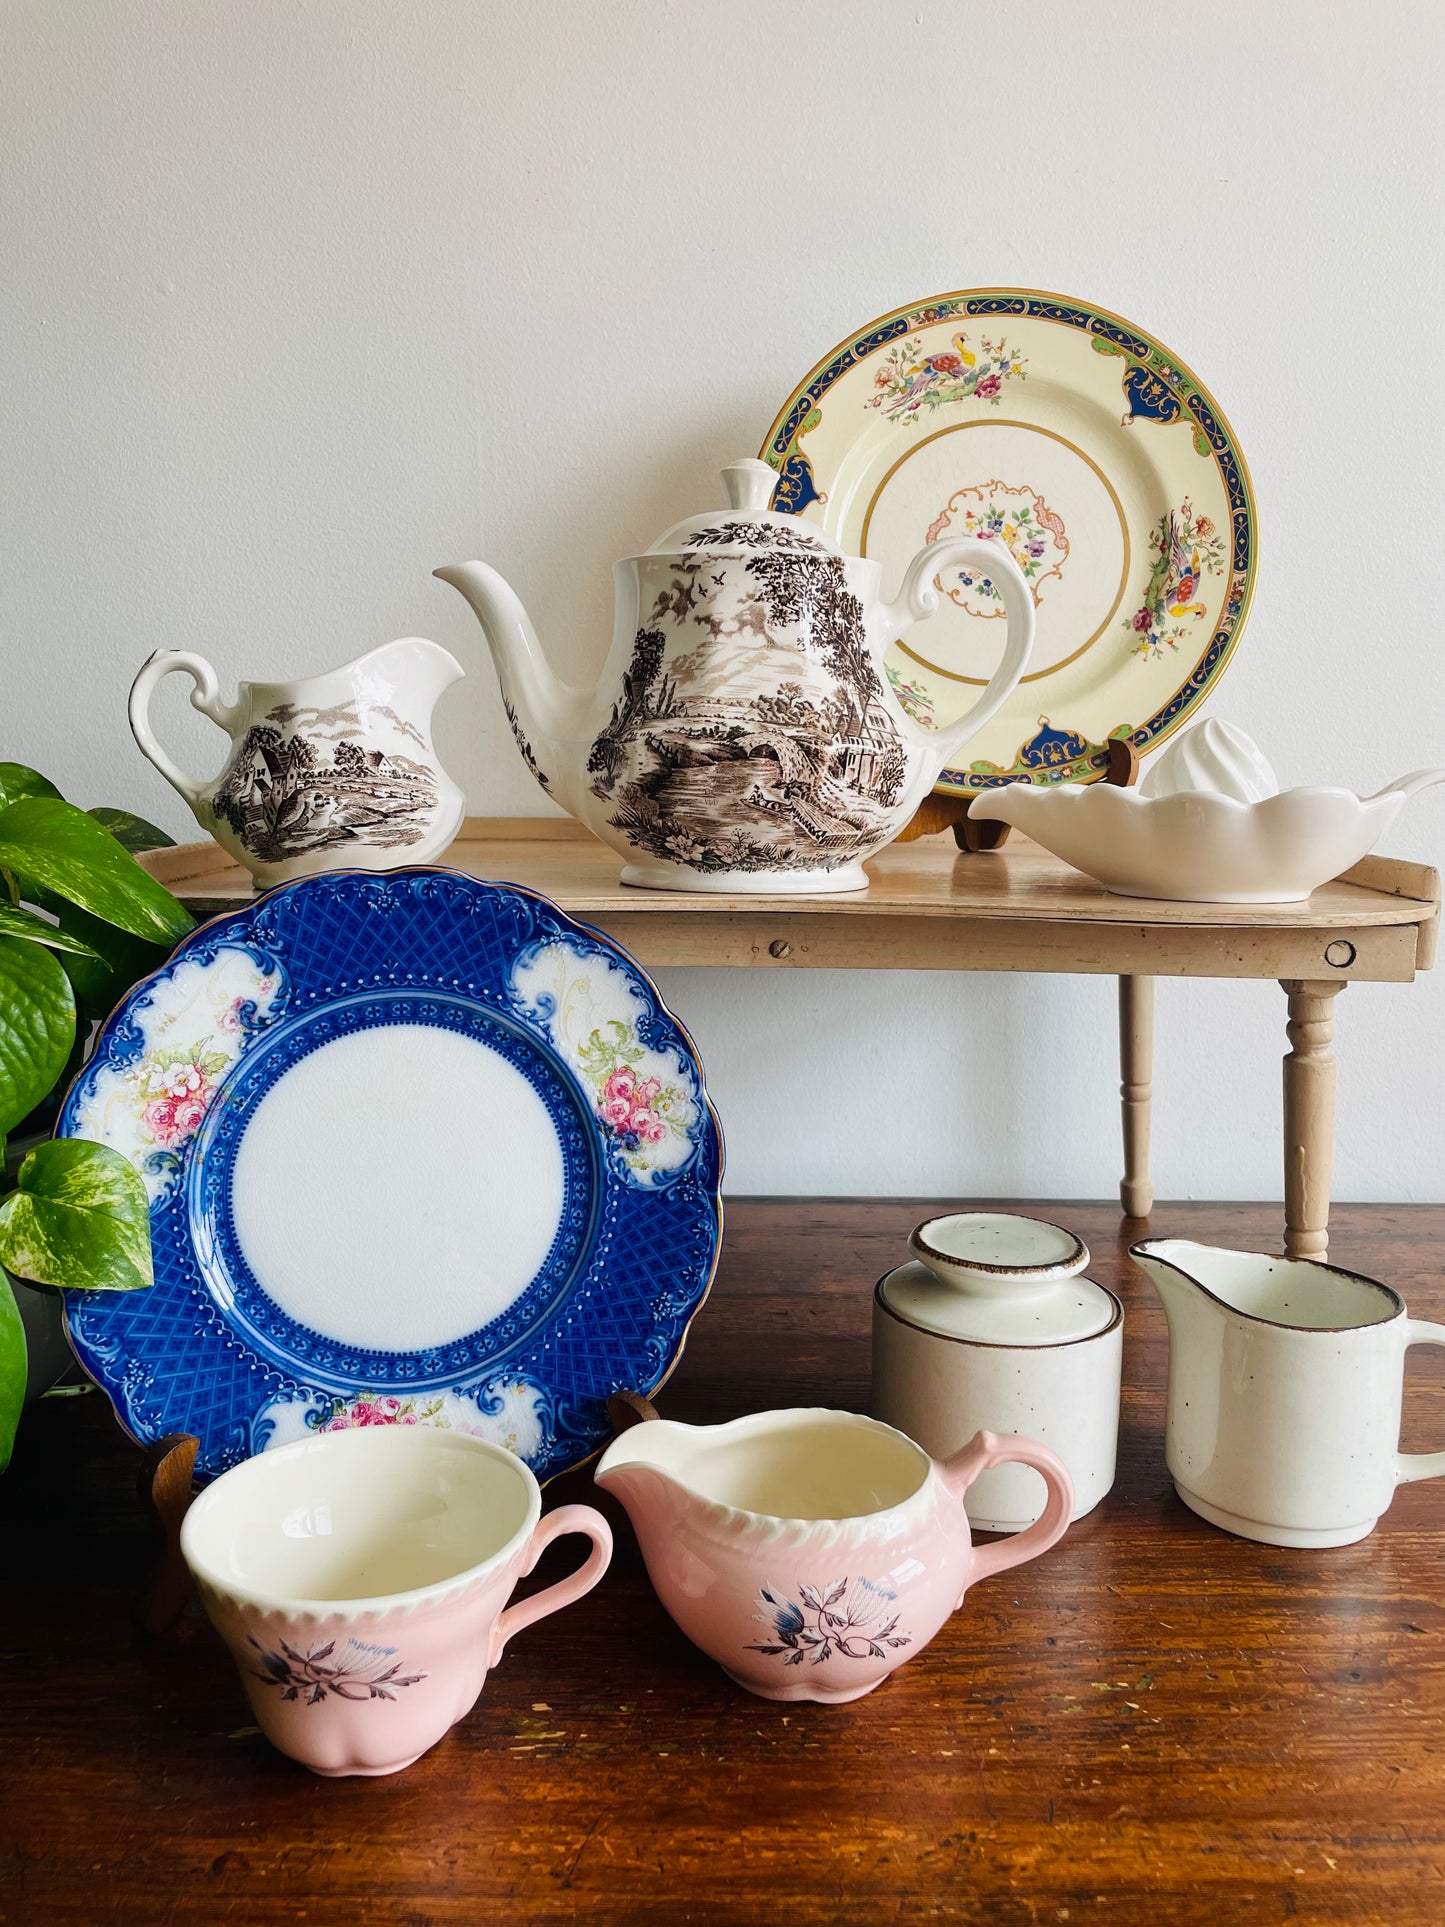 Harkerware Pink Corinthian Tea Cup & Creamer Set - 2 Pieces - Made in USA